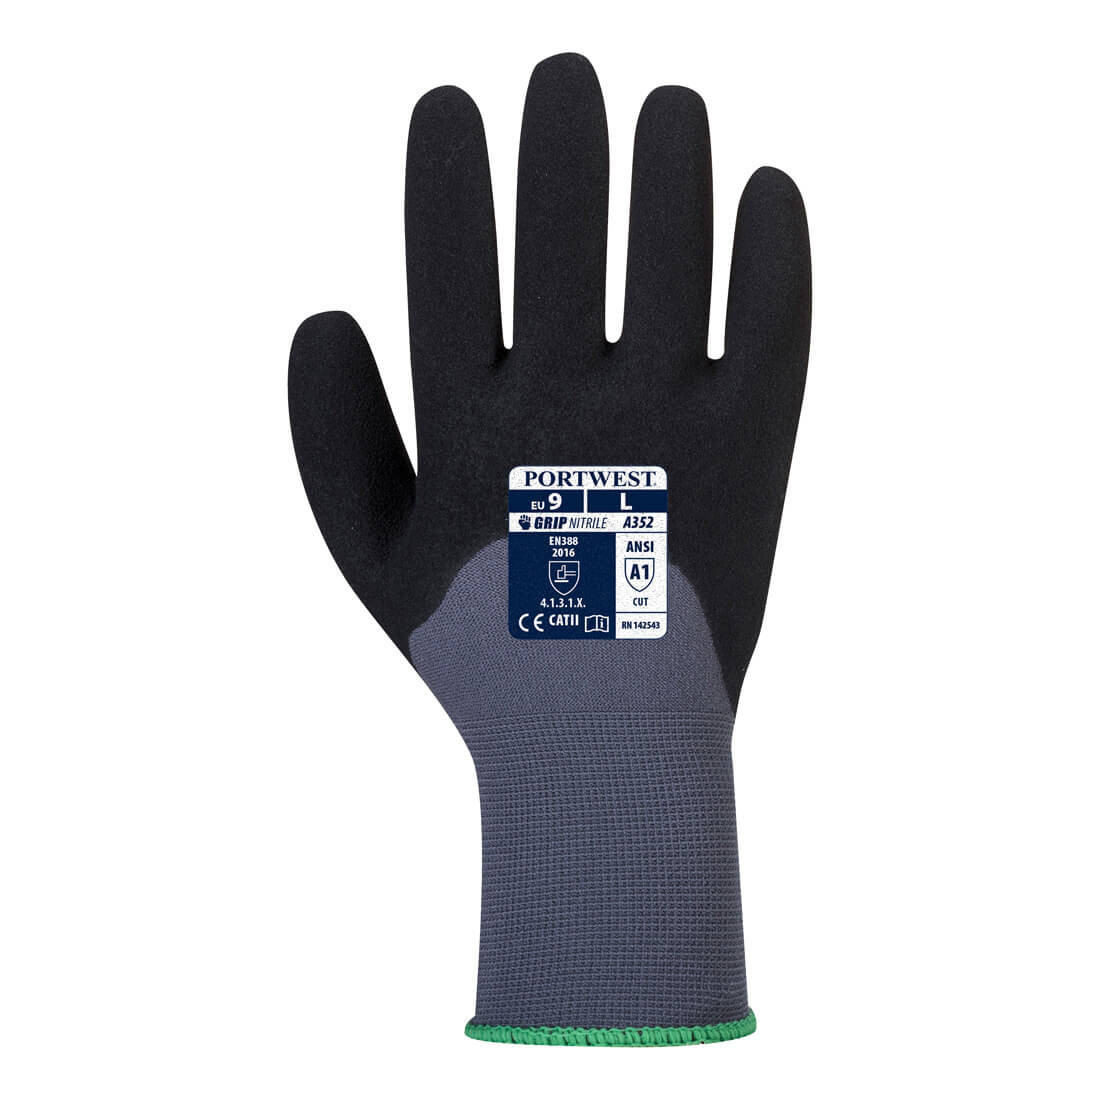 DermiFlex Ultra Glove - Personal protection